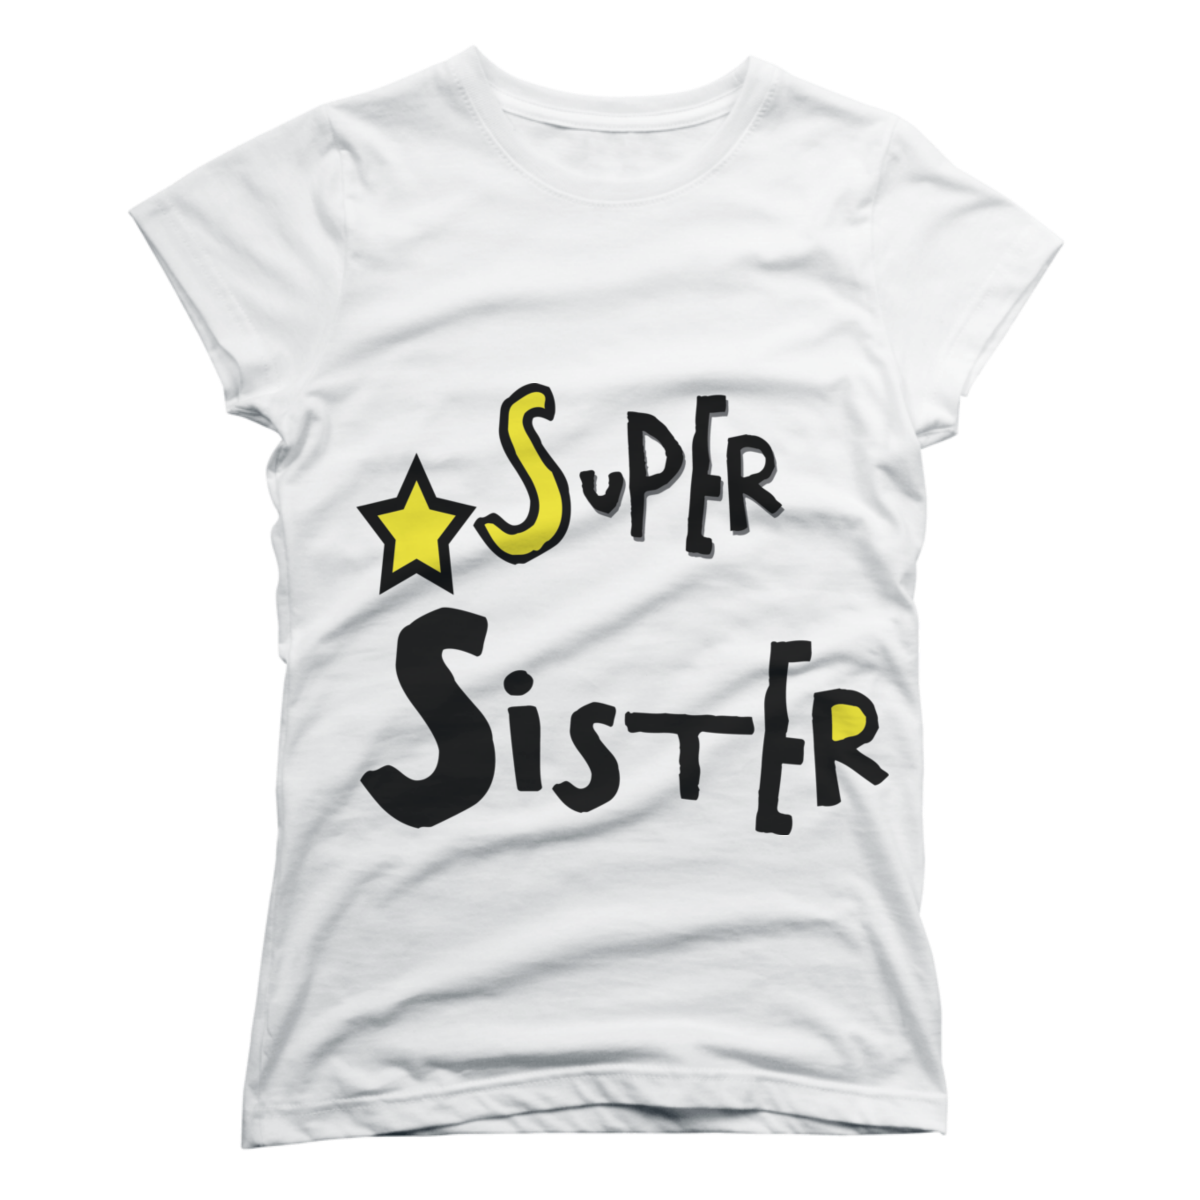 super sister shirt